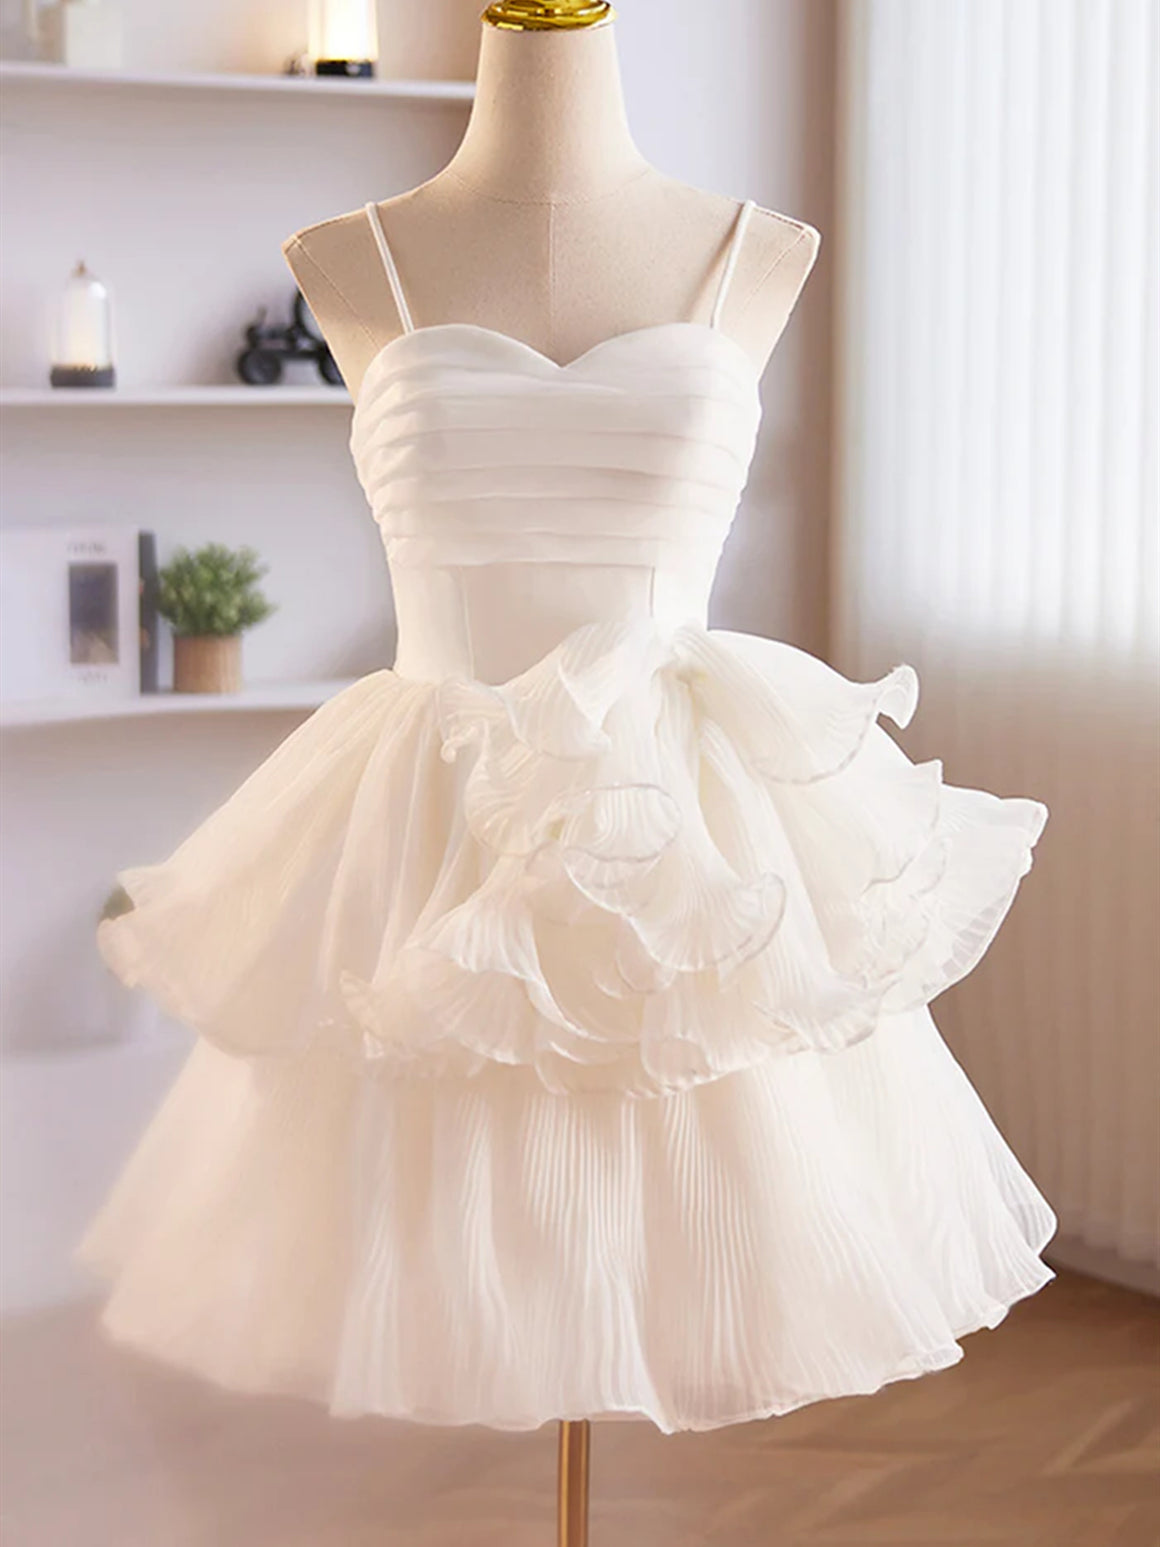 Sweetheart Neck Layered White Chiffon Prom Dresses, Short White Homecoming Dresses